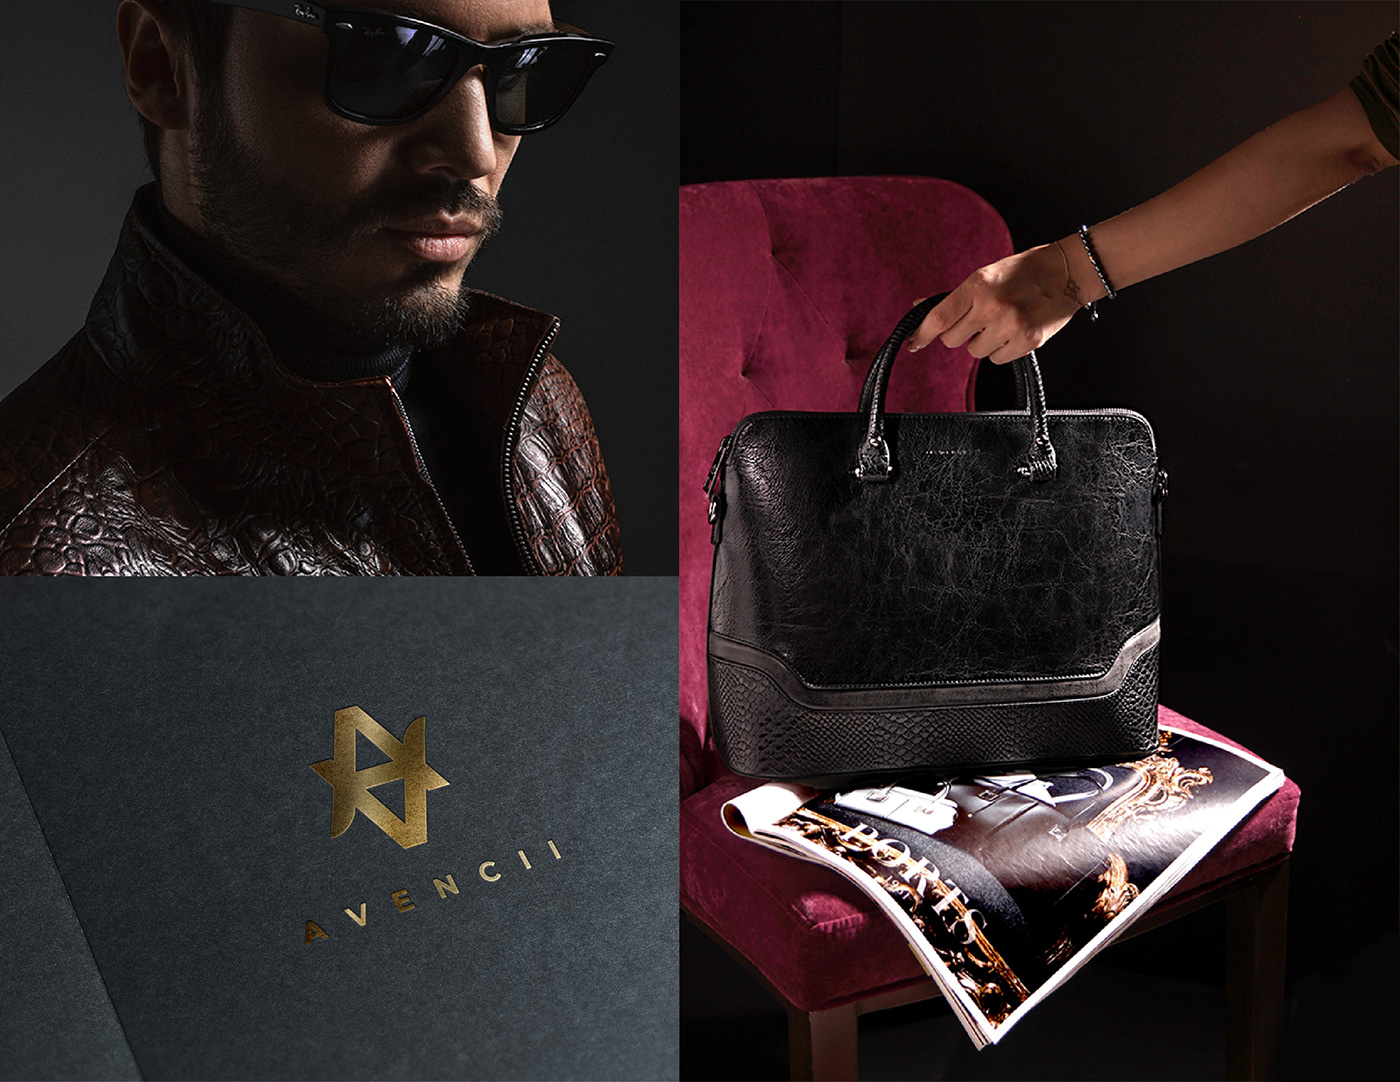 Australia brand archetype brand positioning brand strategy leather products Logotype luxury branding luxury product minimal logo modern brand